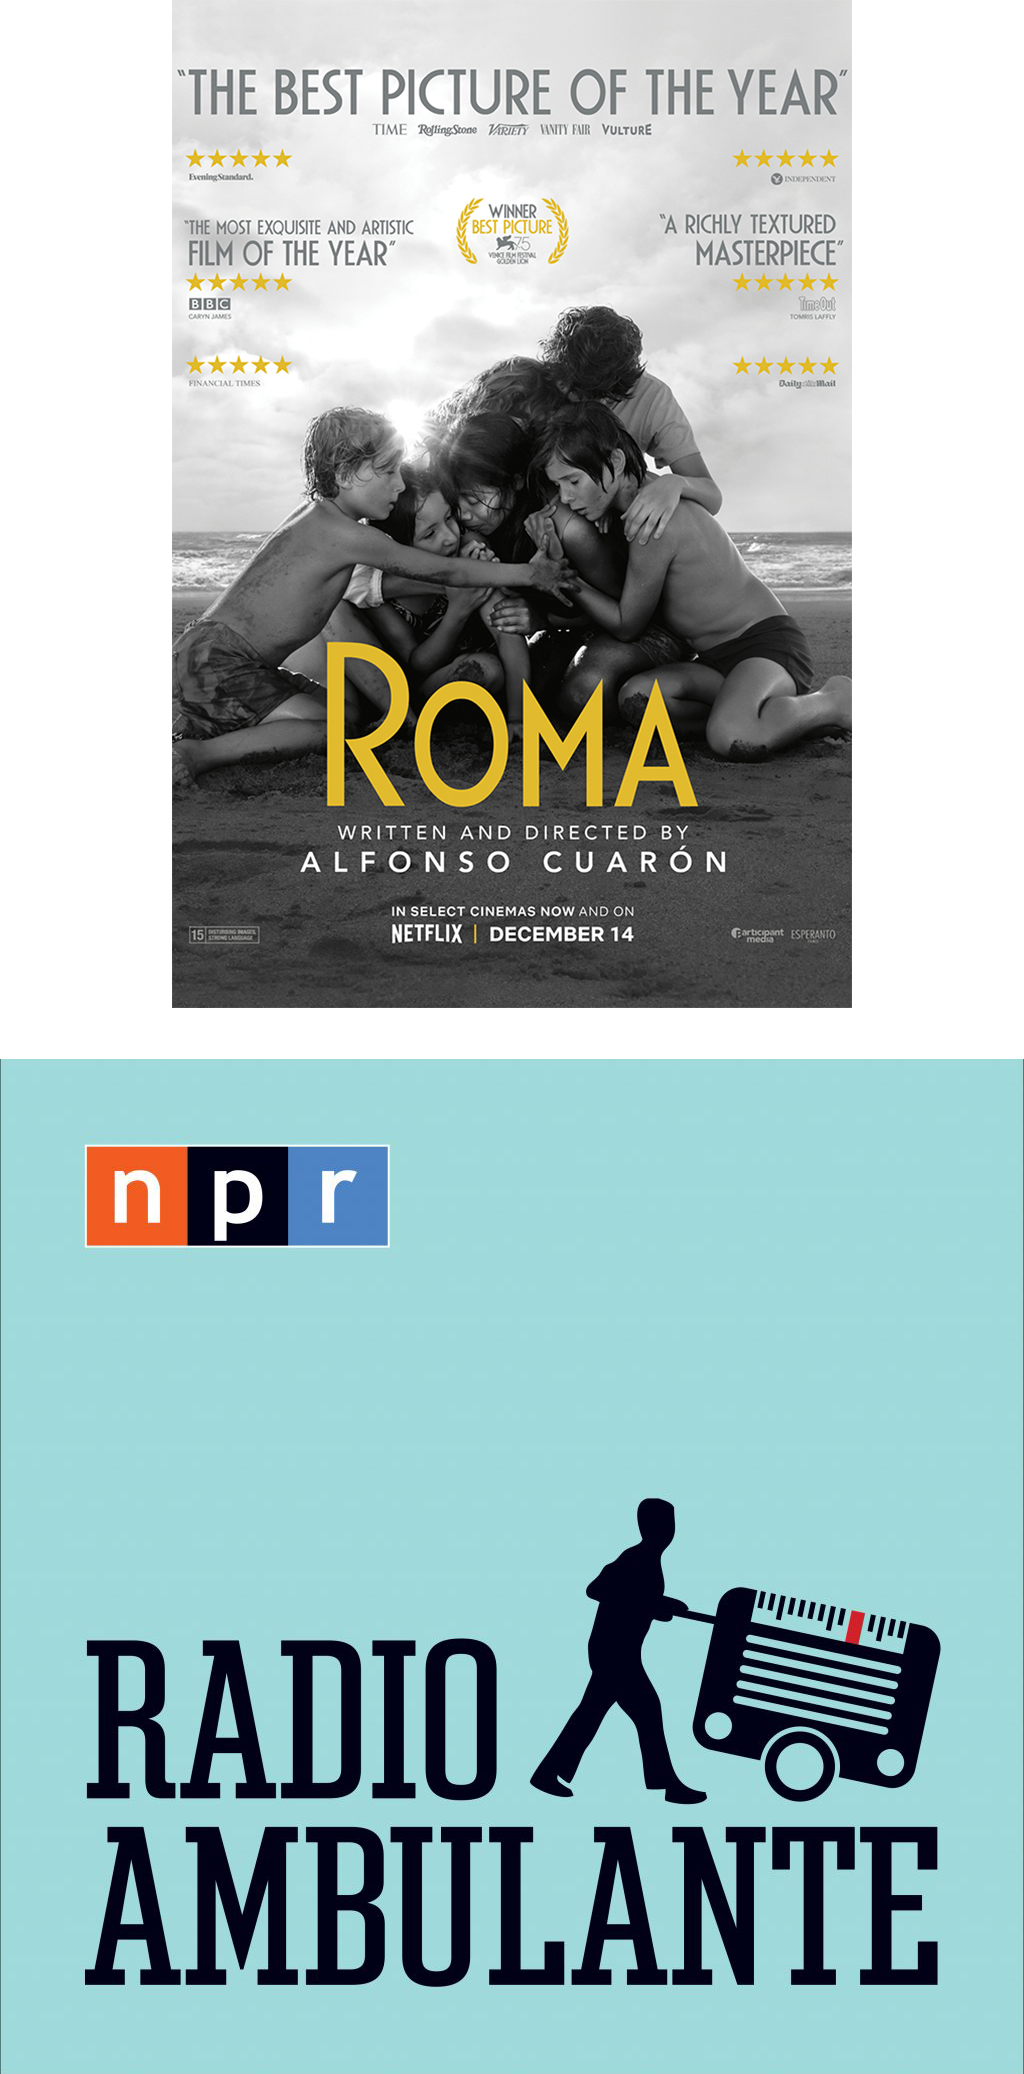 Roma and Radio Ambulante